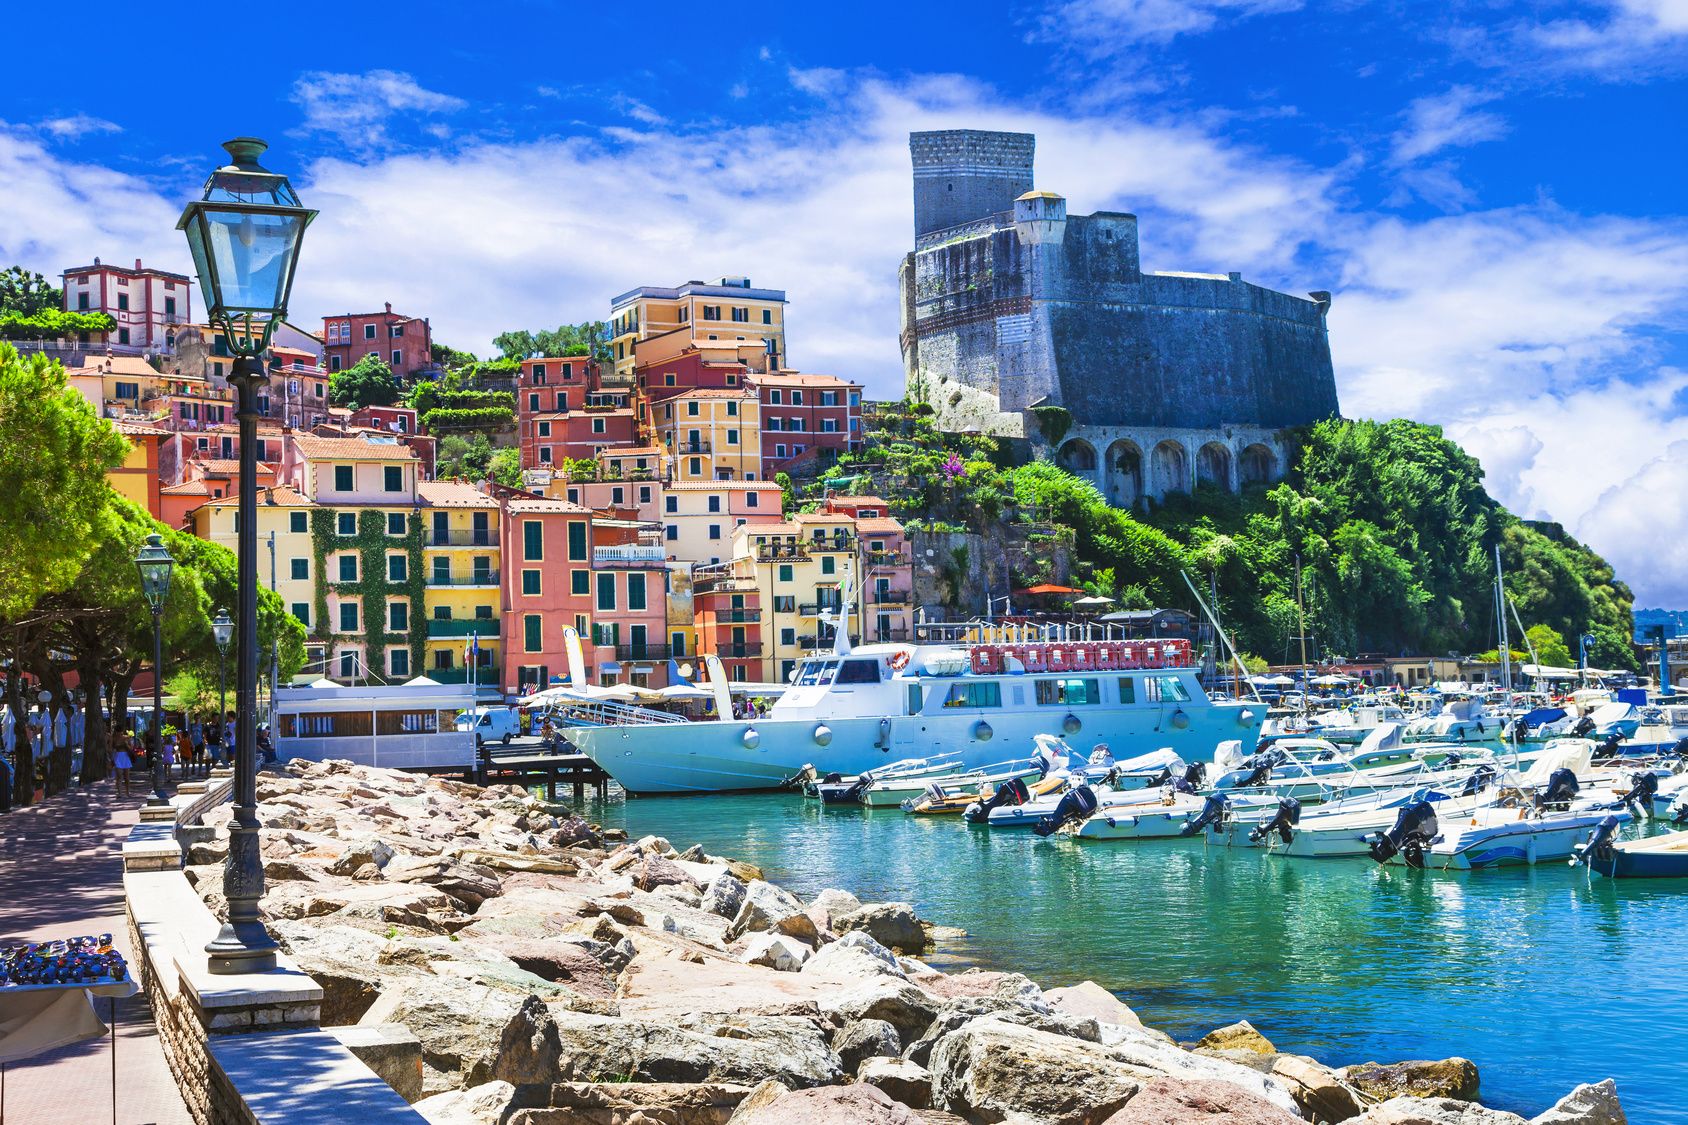 Vivid beautiful town Lerici in Liguria, Italy